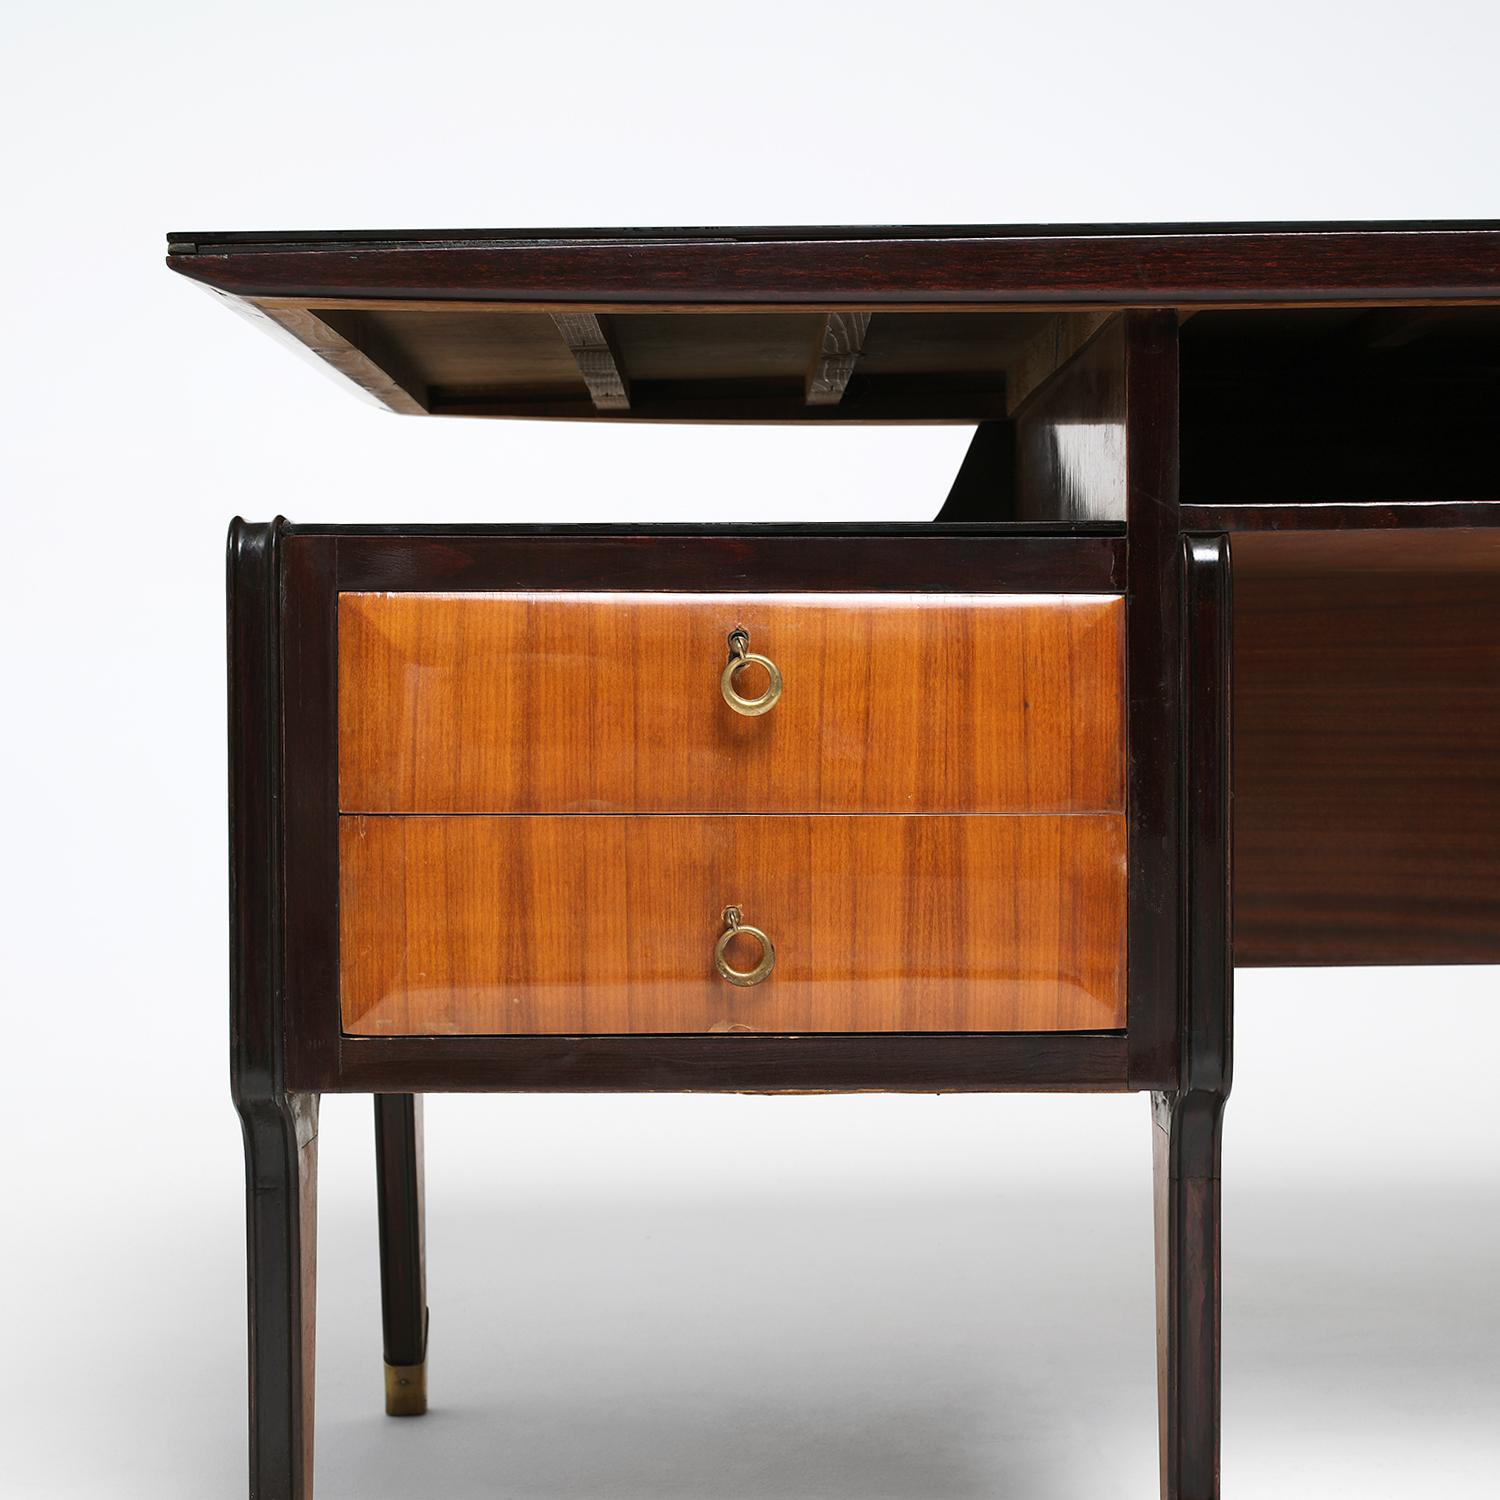 20th Century Italian Mahogany Writing Table - Vintage Desk by Vittorio Dassi For Sale 8